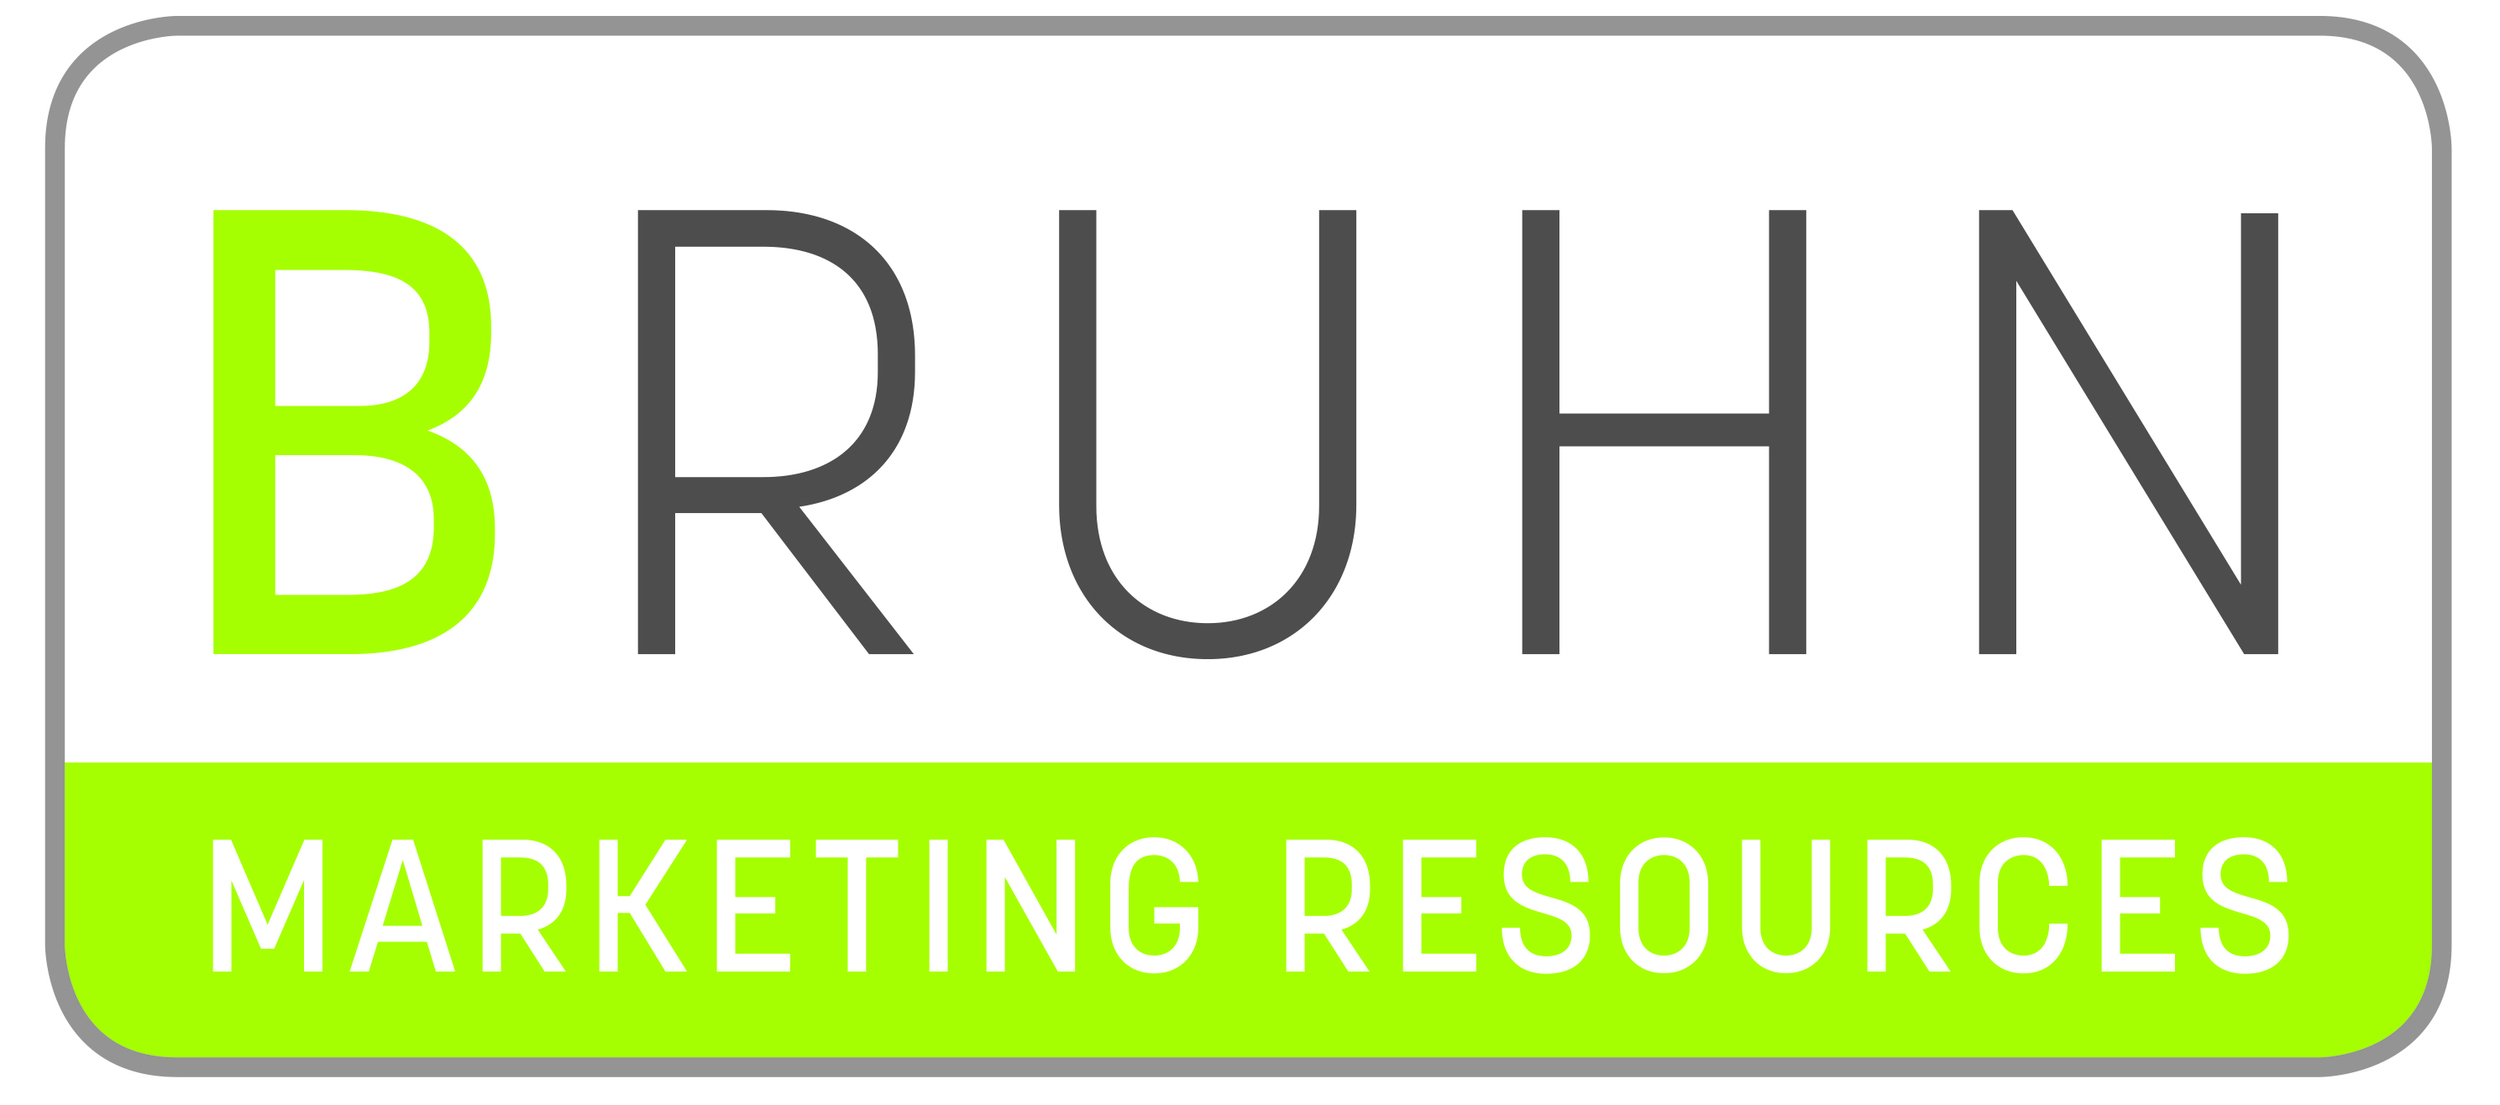 Bruhn Marketing Resources Logo high res.jpg